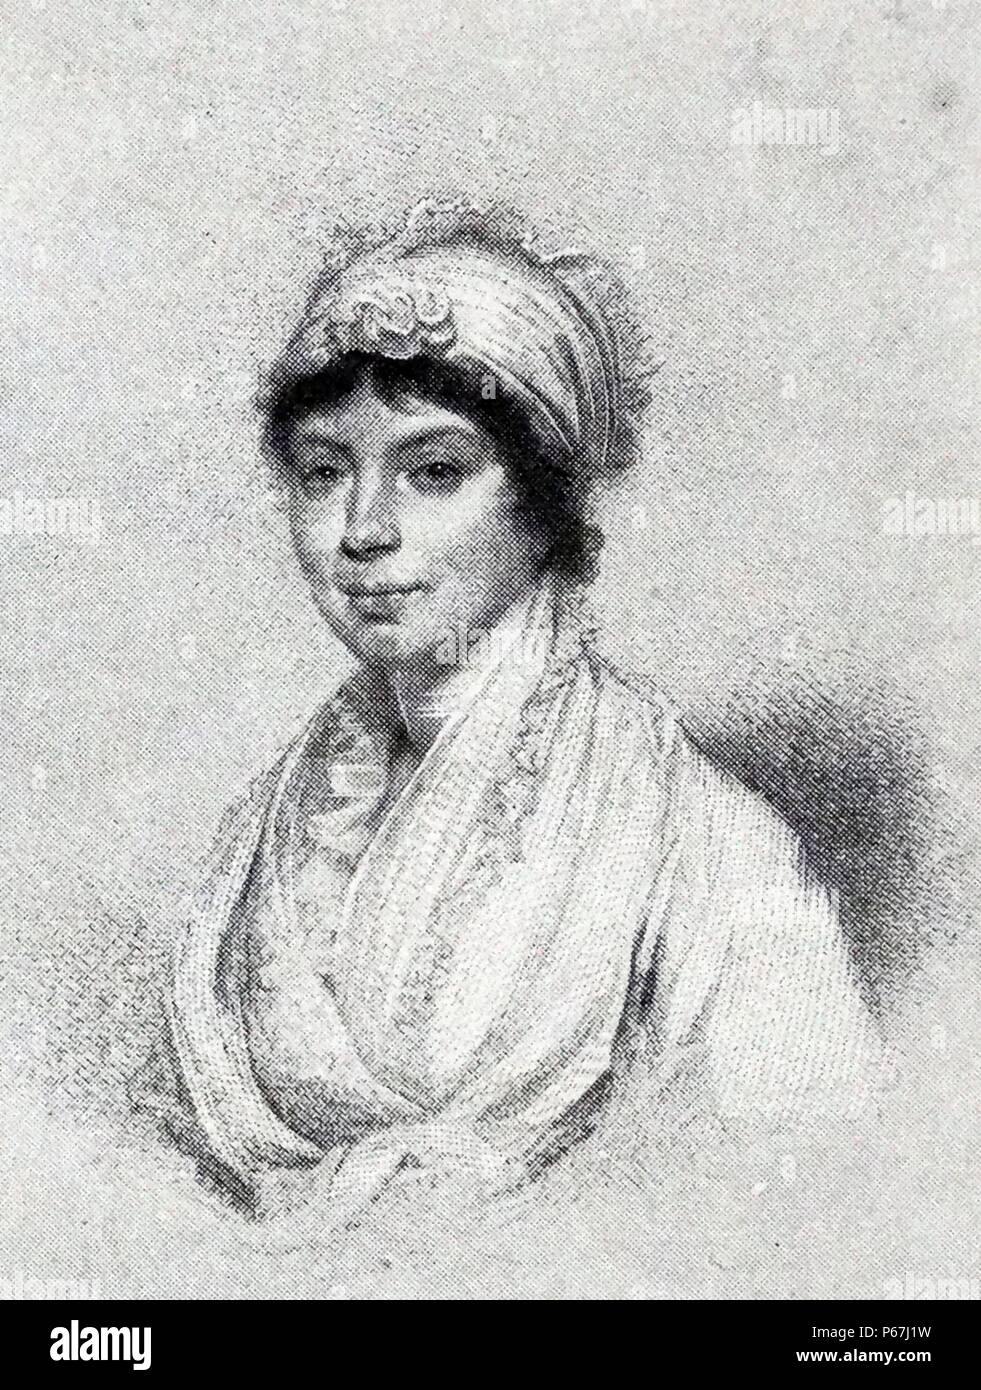 Charlotte reine de Grande-Bretagne 1800 Banque D'Images